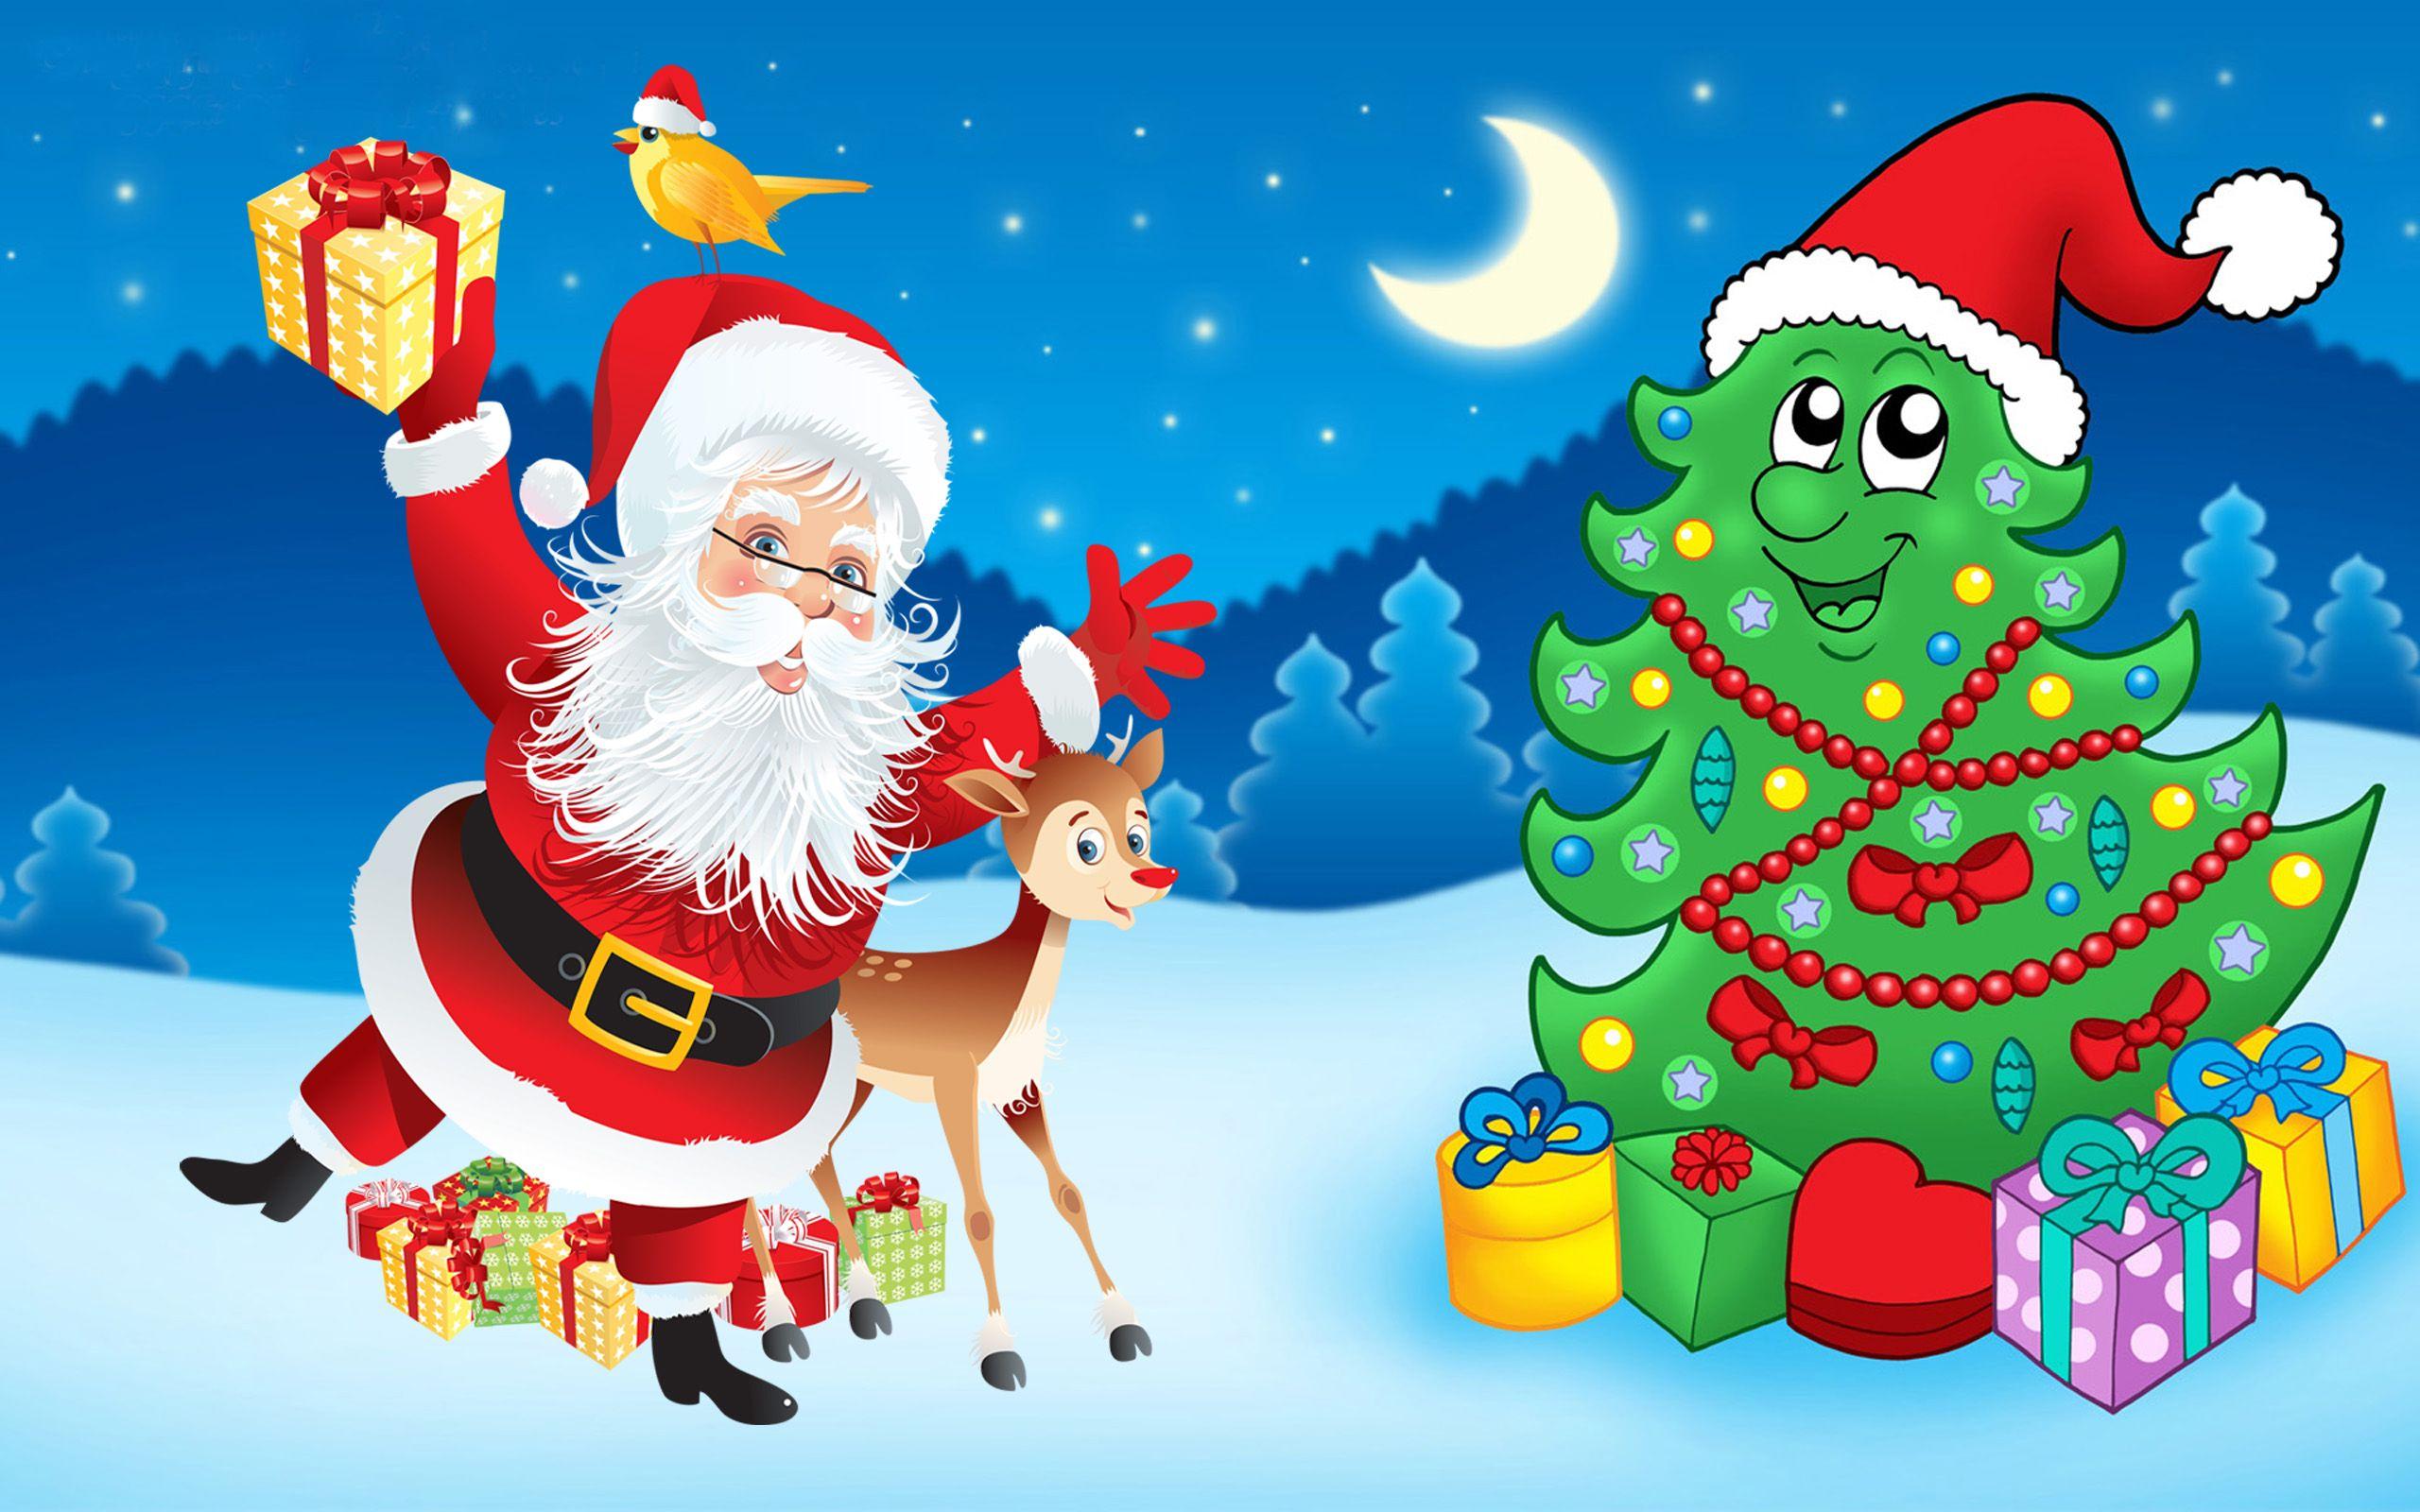 Santa Claus Christmas Tree Decorations Gifts Cartoon Christmas